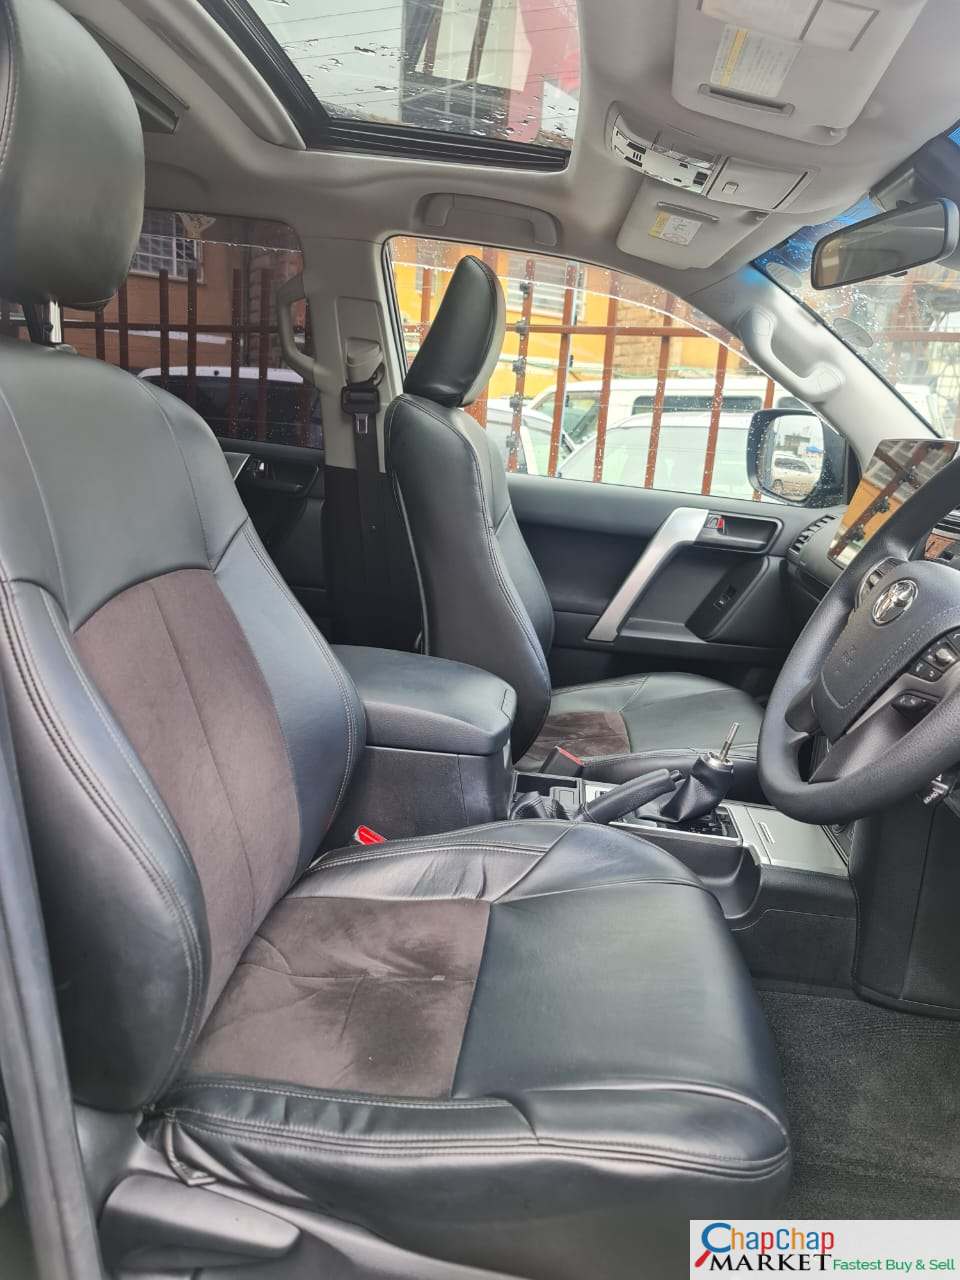 Toyota PRADO 2018 Sunroof Quick SALE TRADE IN OK EXCLUSIVE!